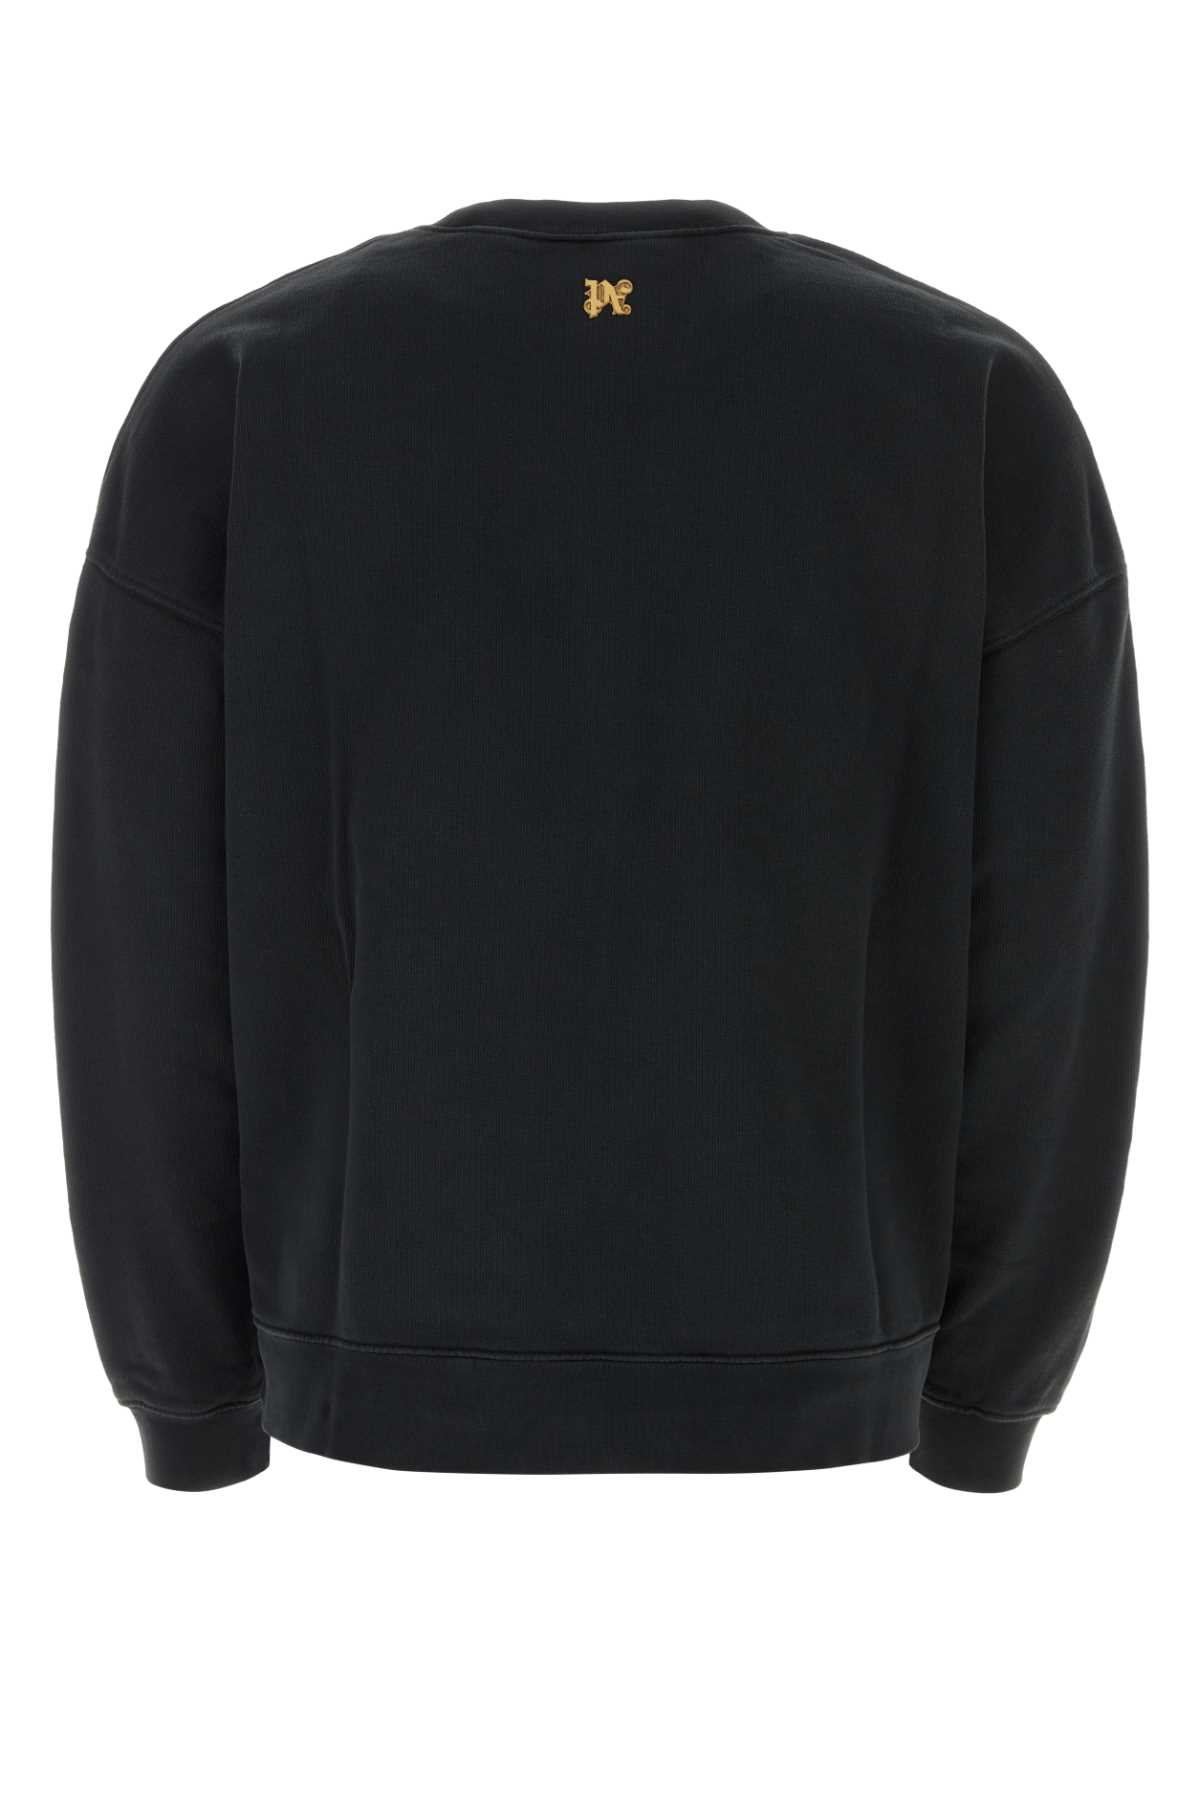 Palm Angels Black Cotton Oversize Sweatshirt In Blackgold